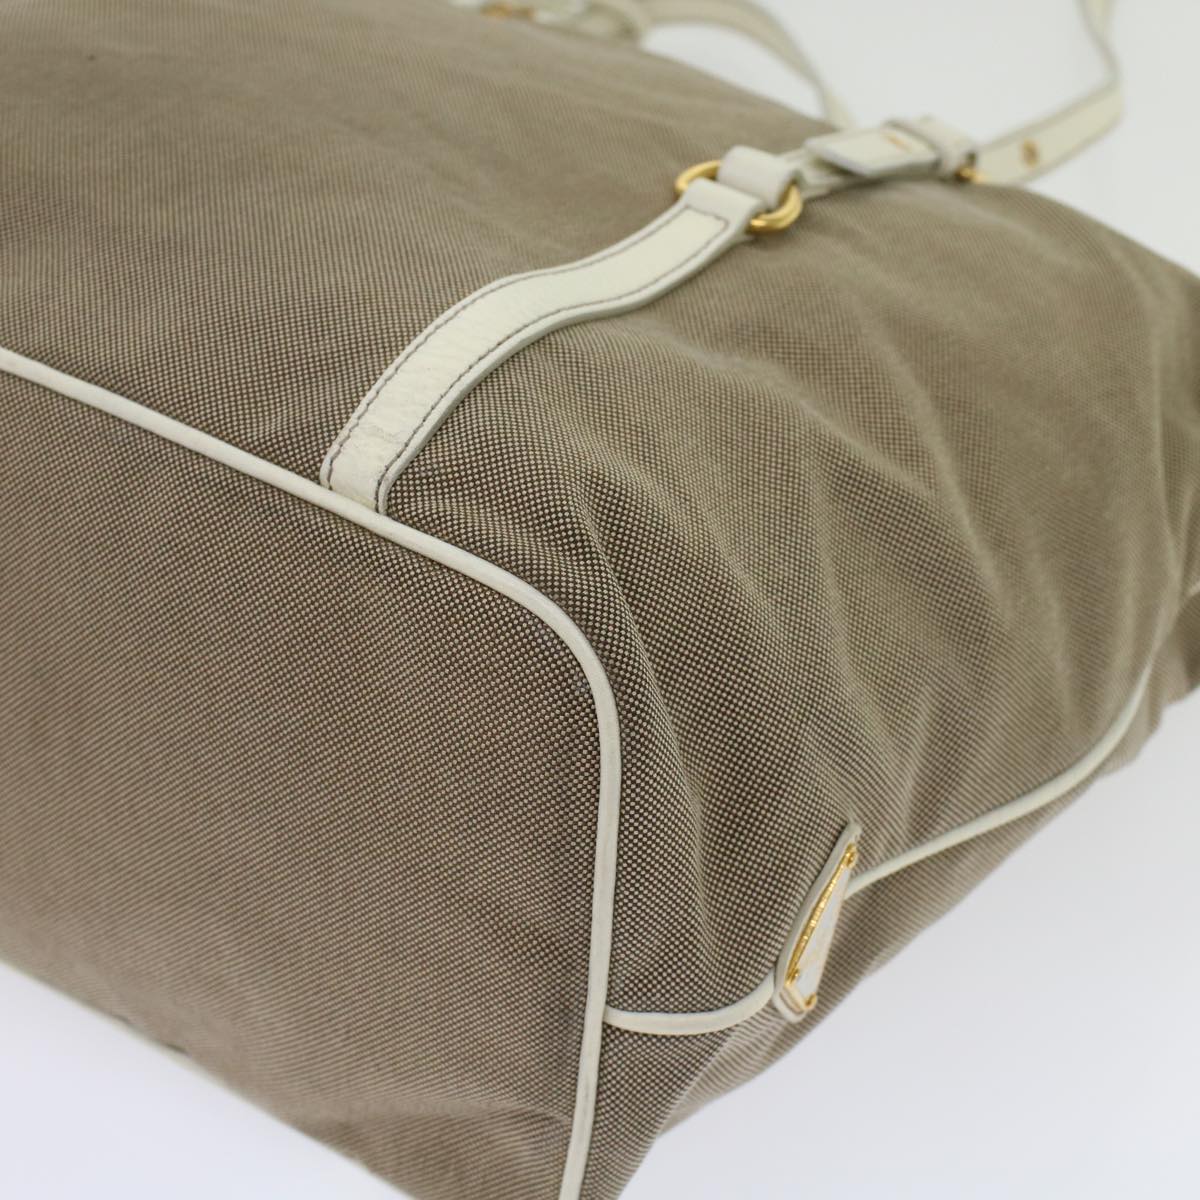 PRADA Shoulder Bag Canvas Leather 2way Khaki Auth 45717